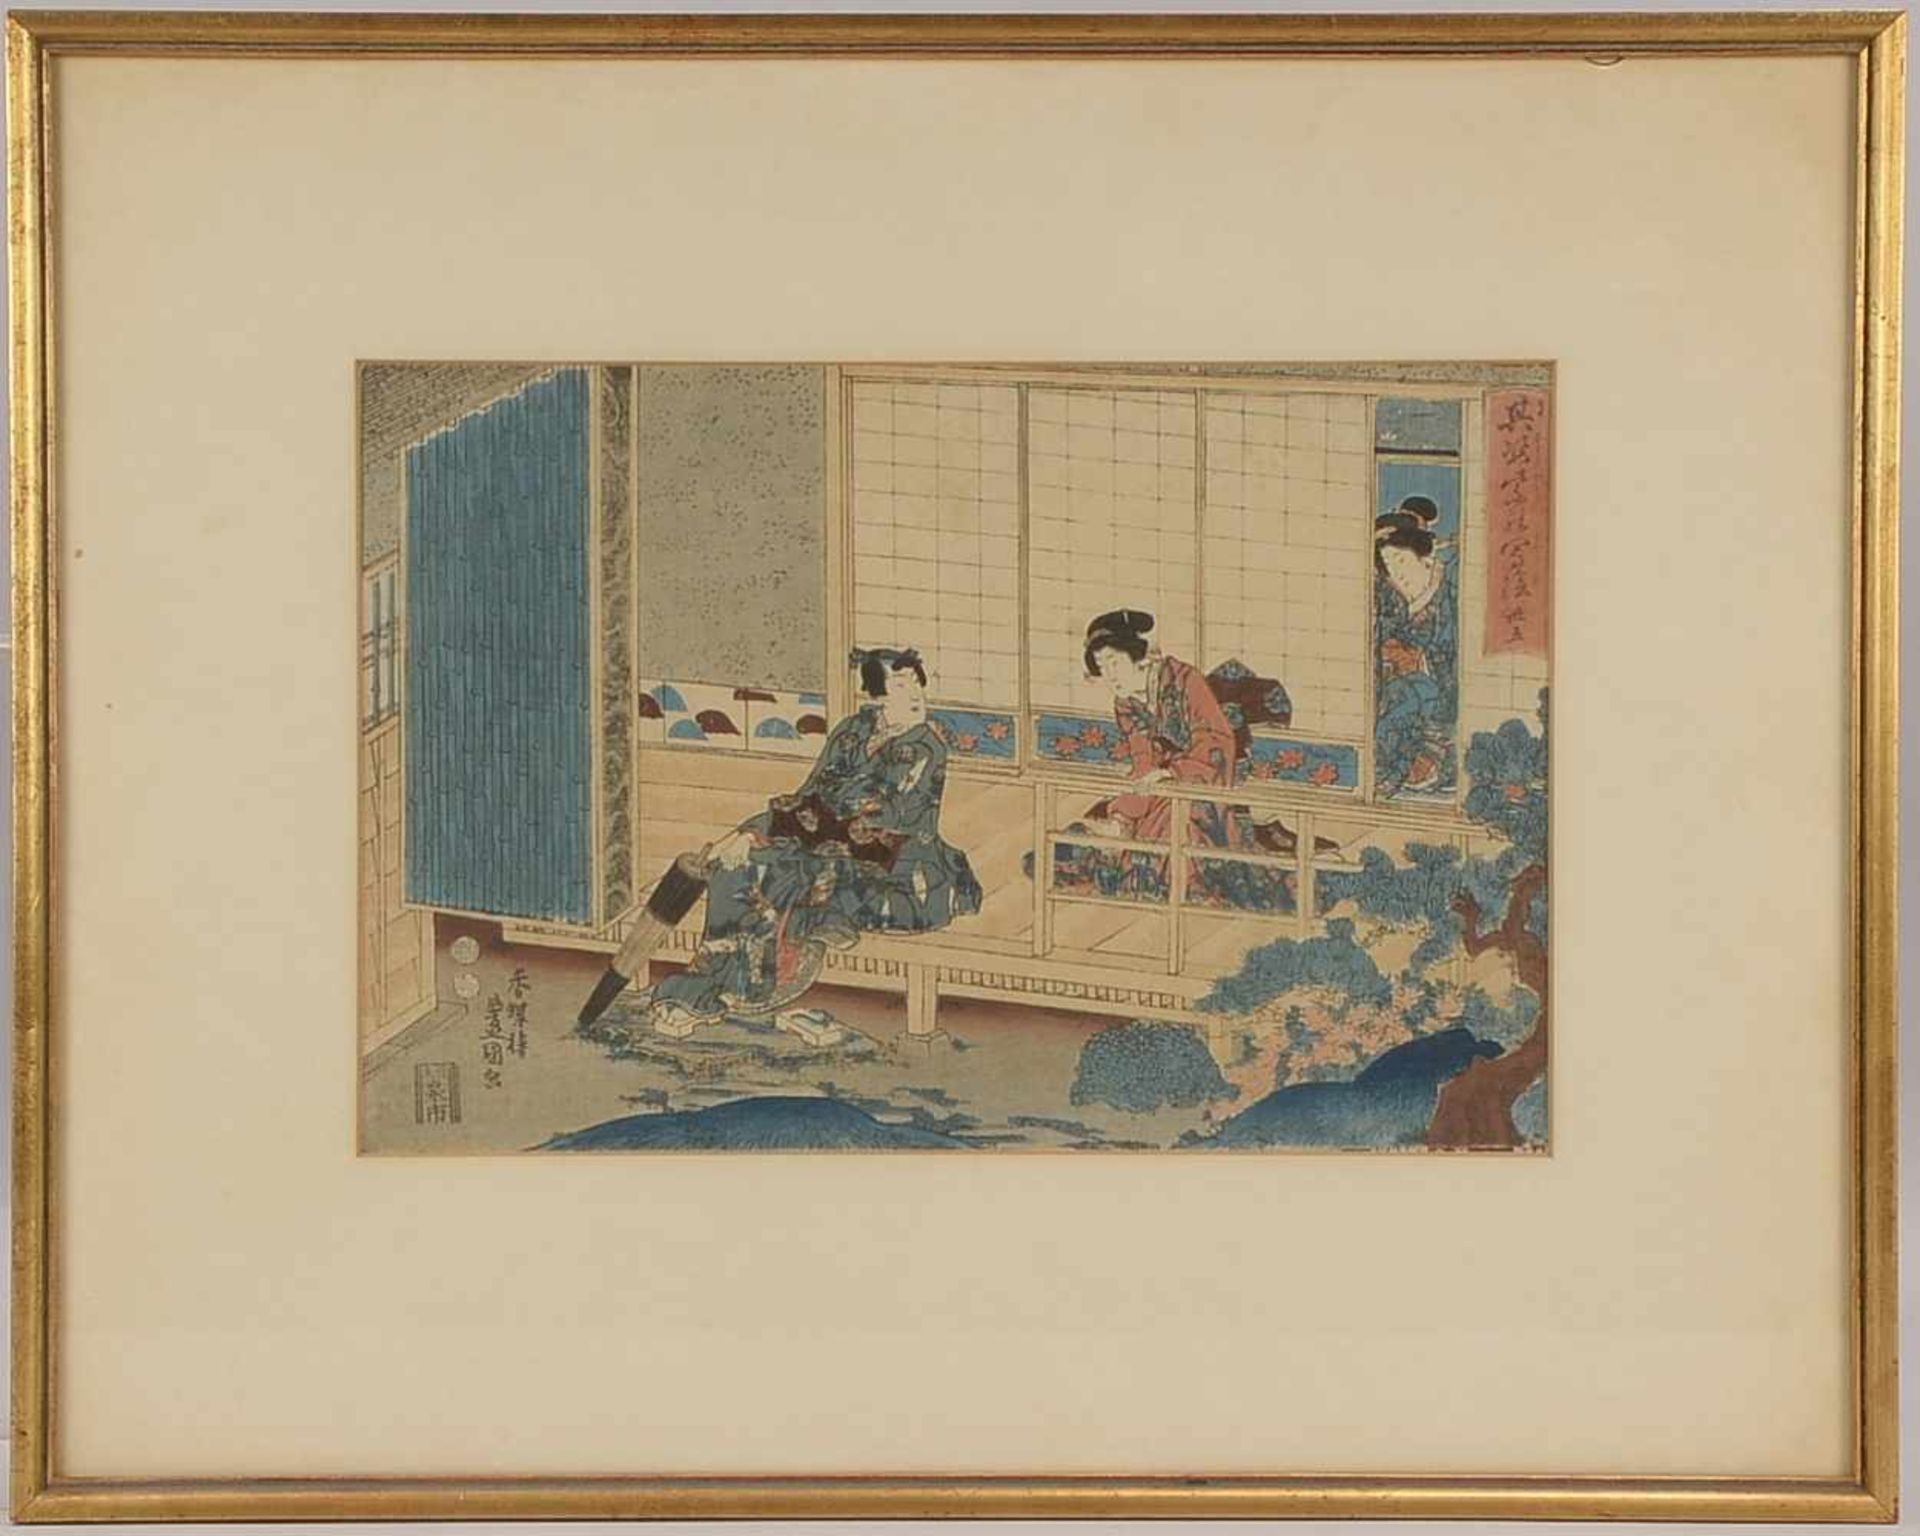 Druckgrafik (Japan), 'Geishas', koloriert, unter Passepartout hinter Glas gerahmt; Blattmaße 22 x